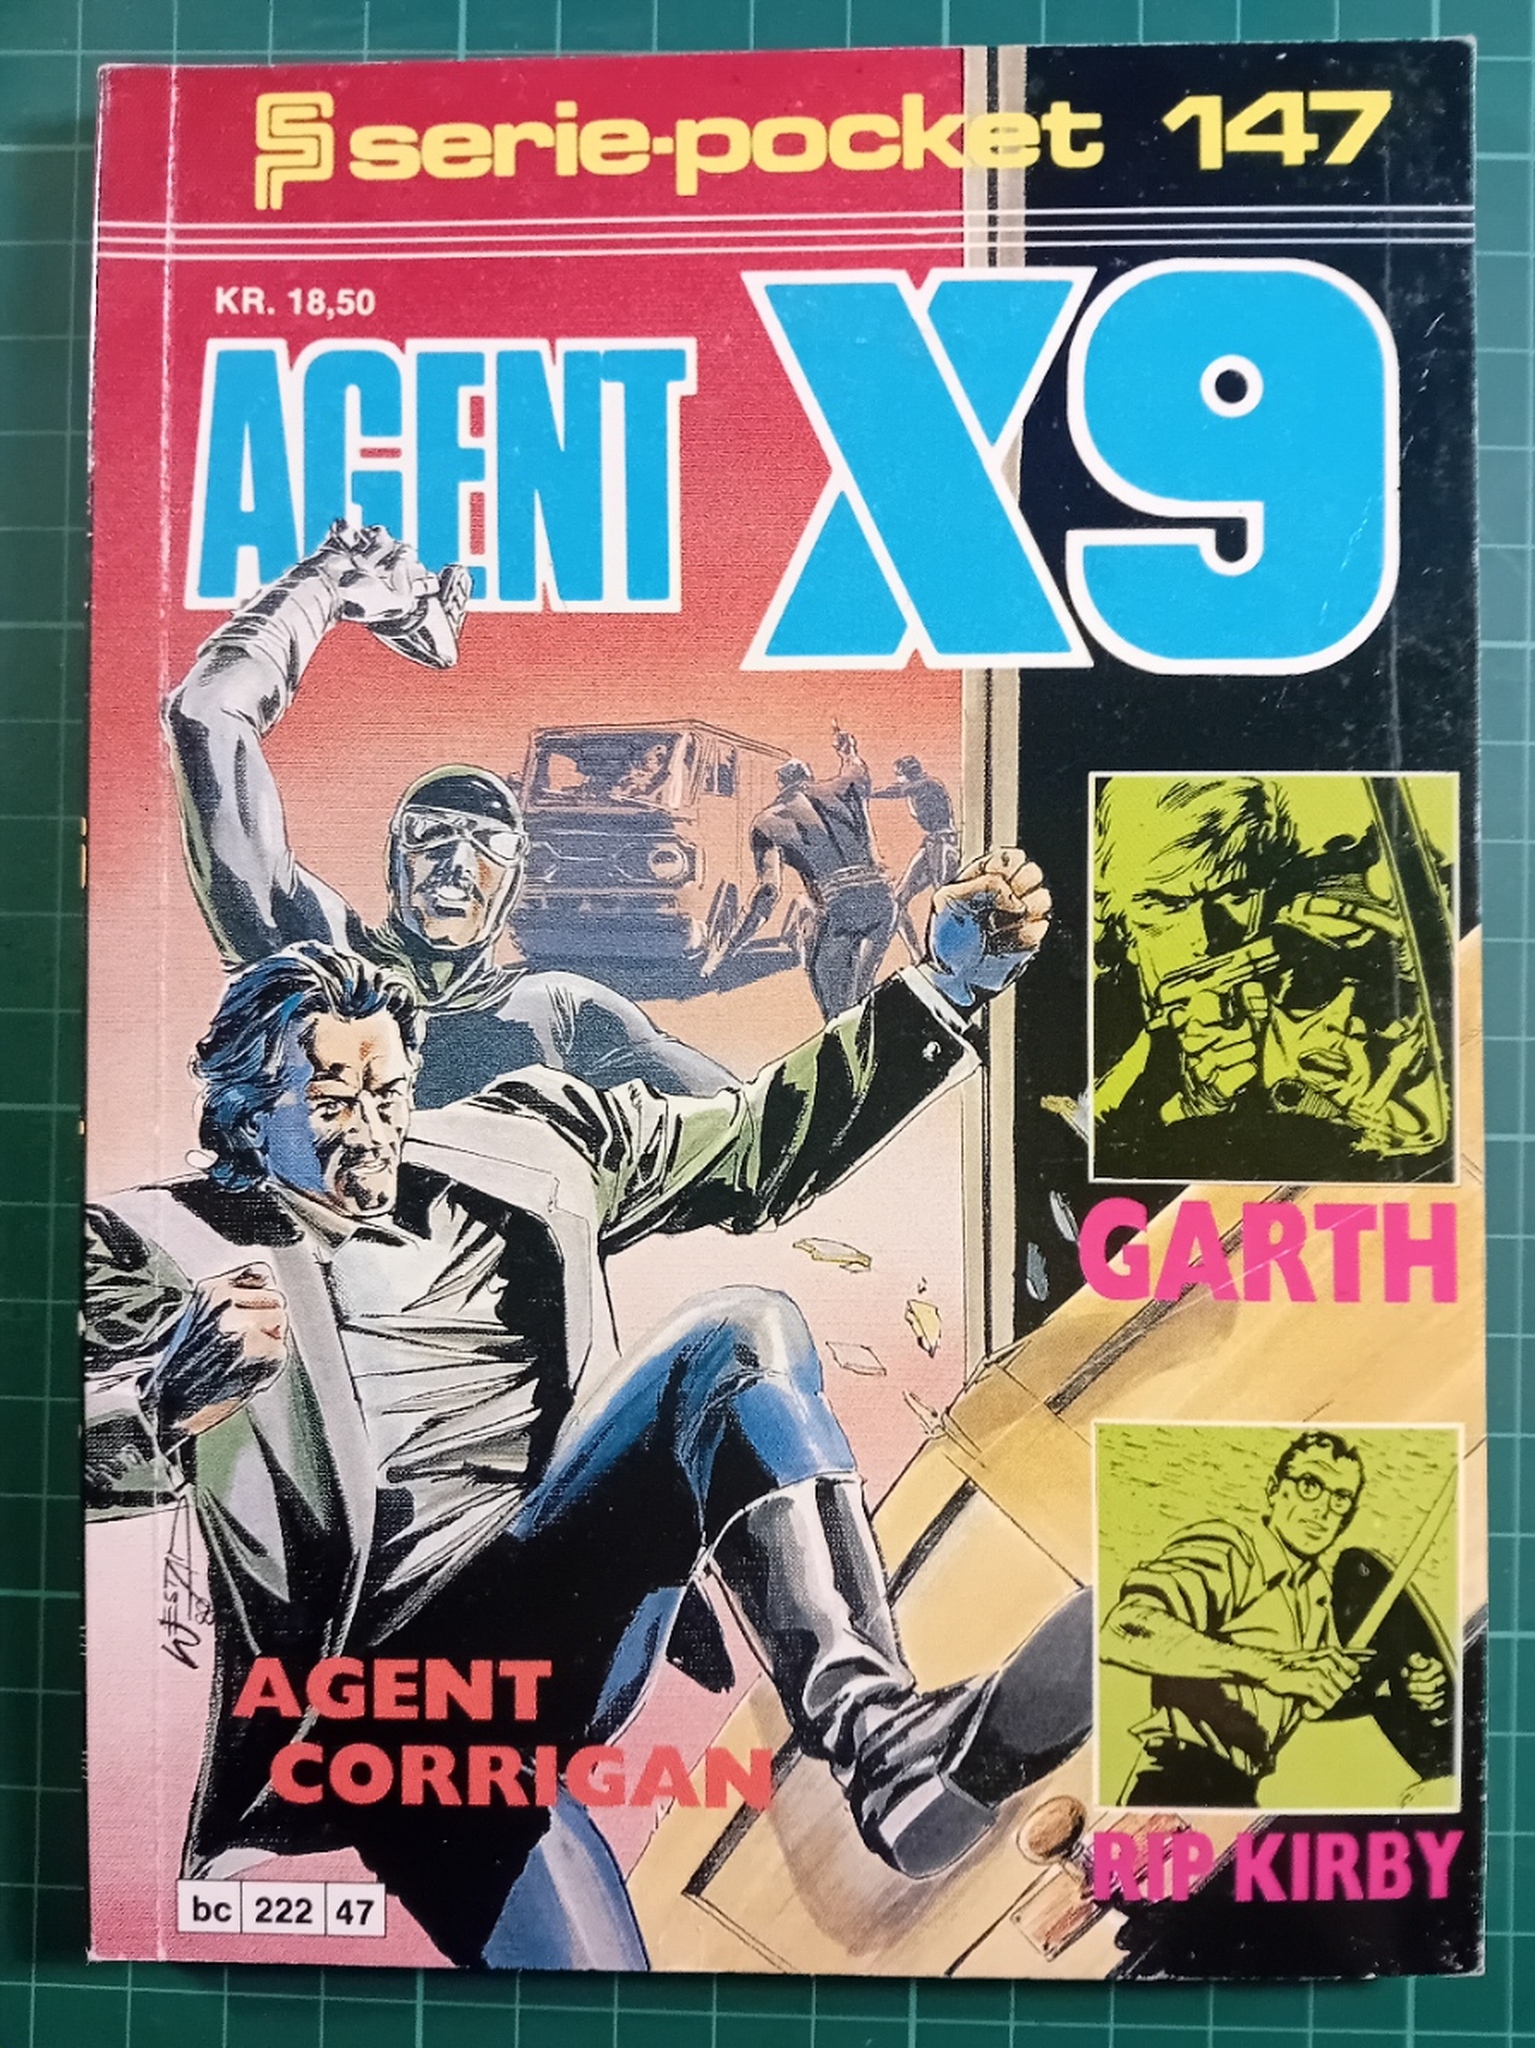 Serie-pocket 147 : Agent X9